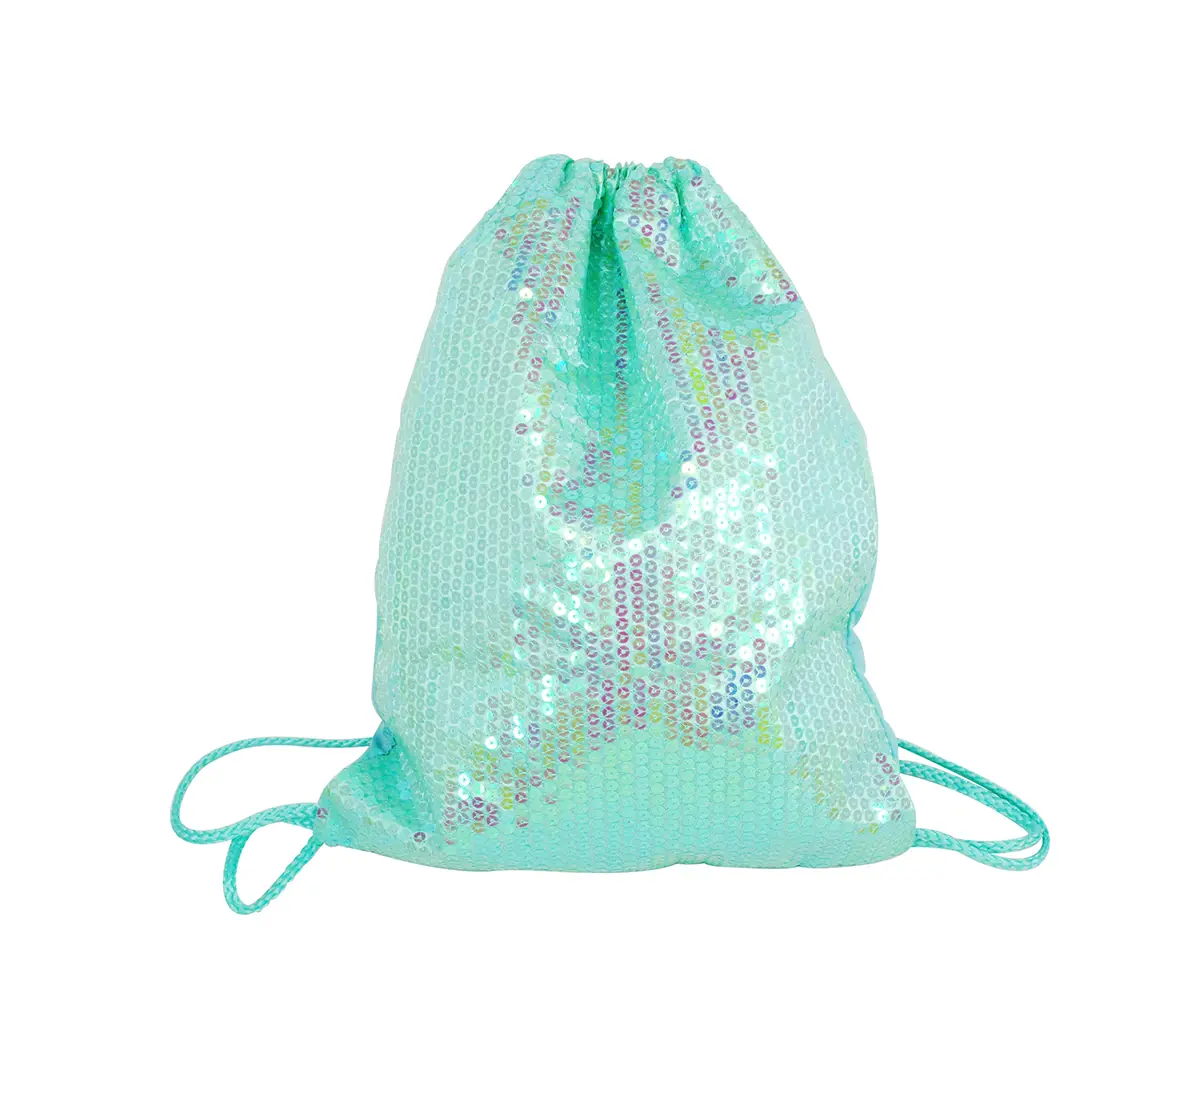  Luvley Vivid Ballet Mint Drawstring Bag Accessories age 3Y+ 